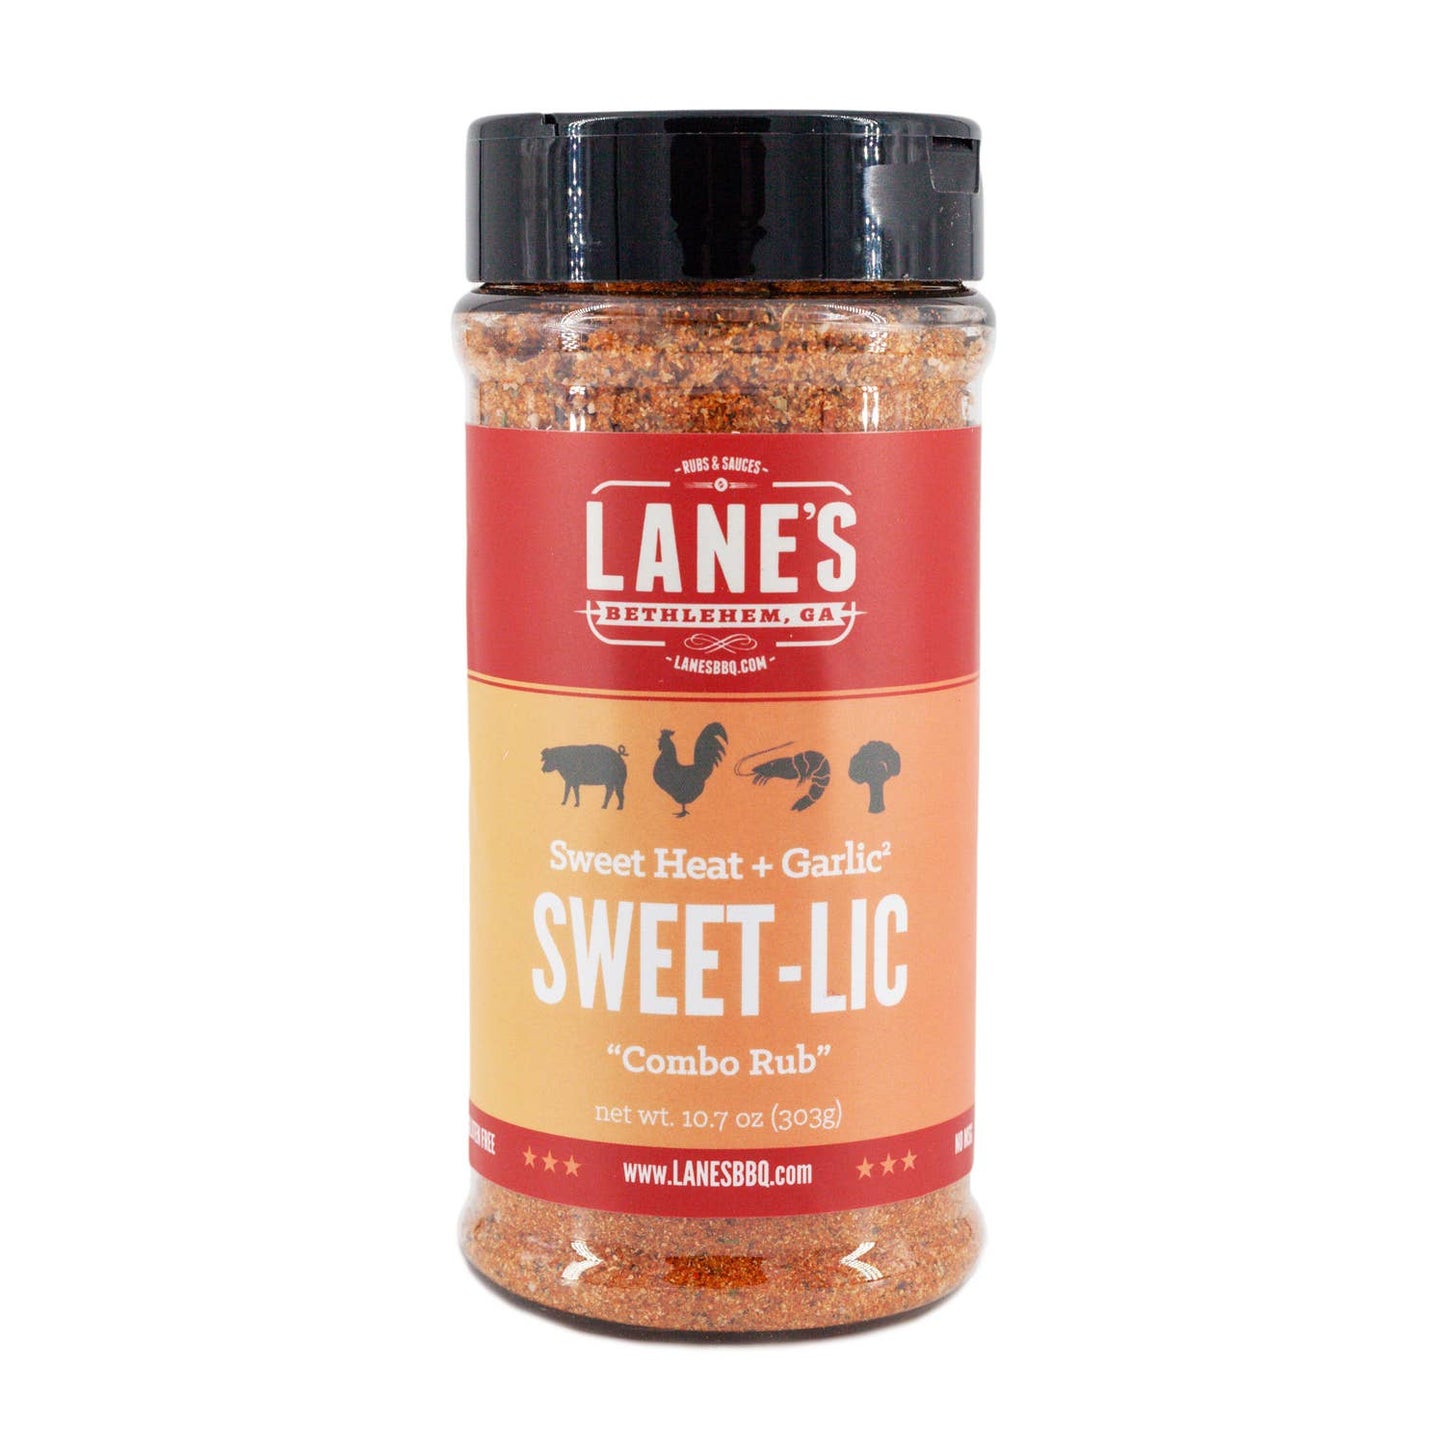 Lane's BBQ - Sweet-Lic Combo Rub